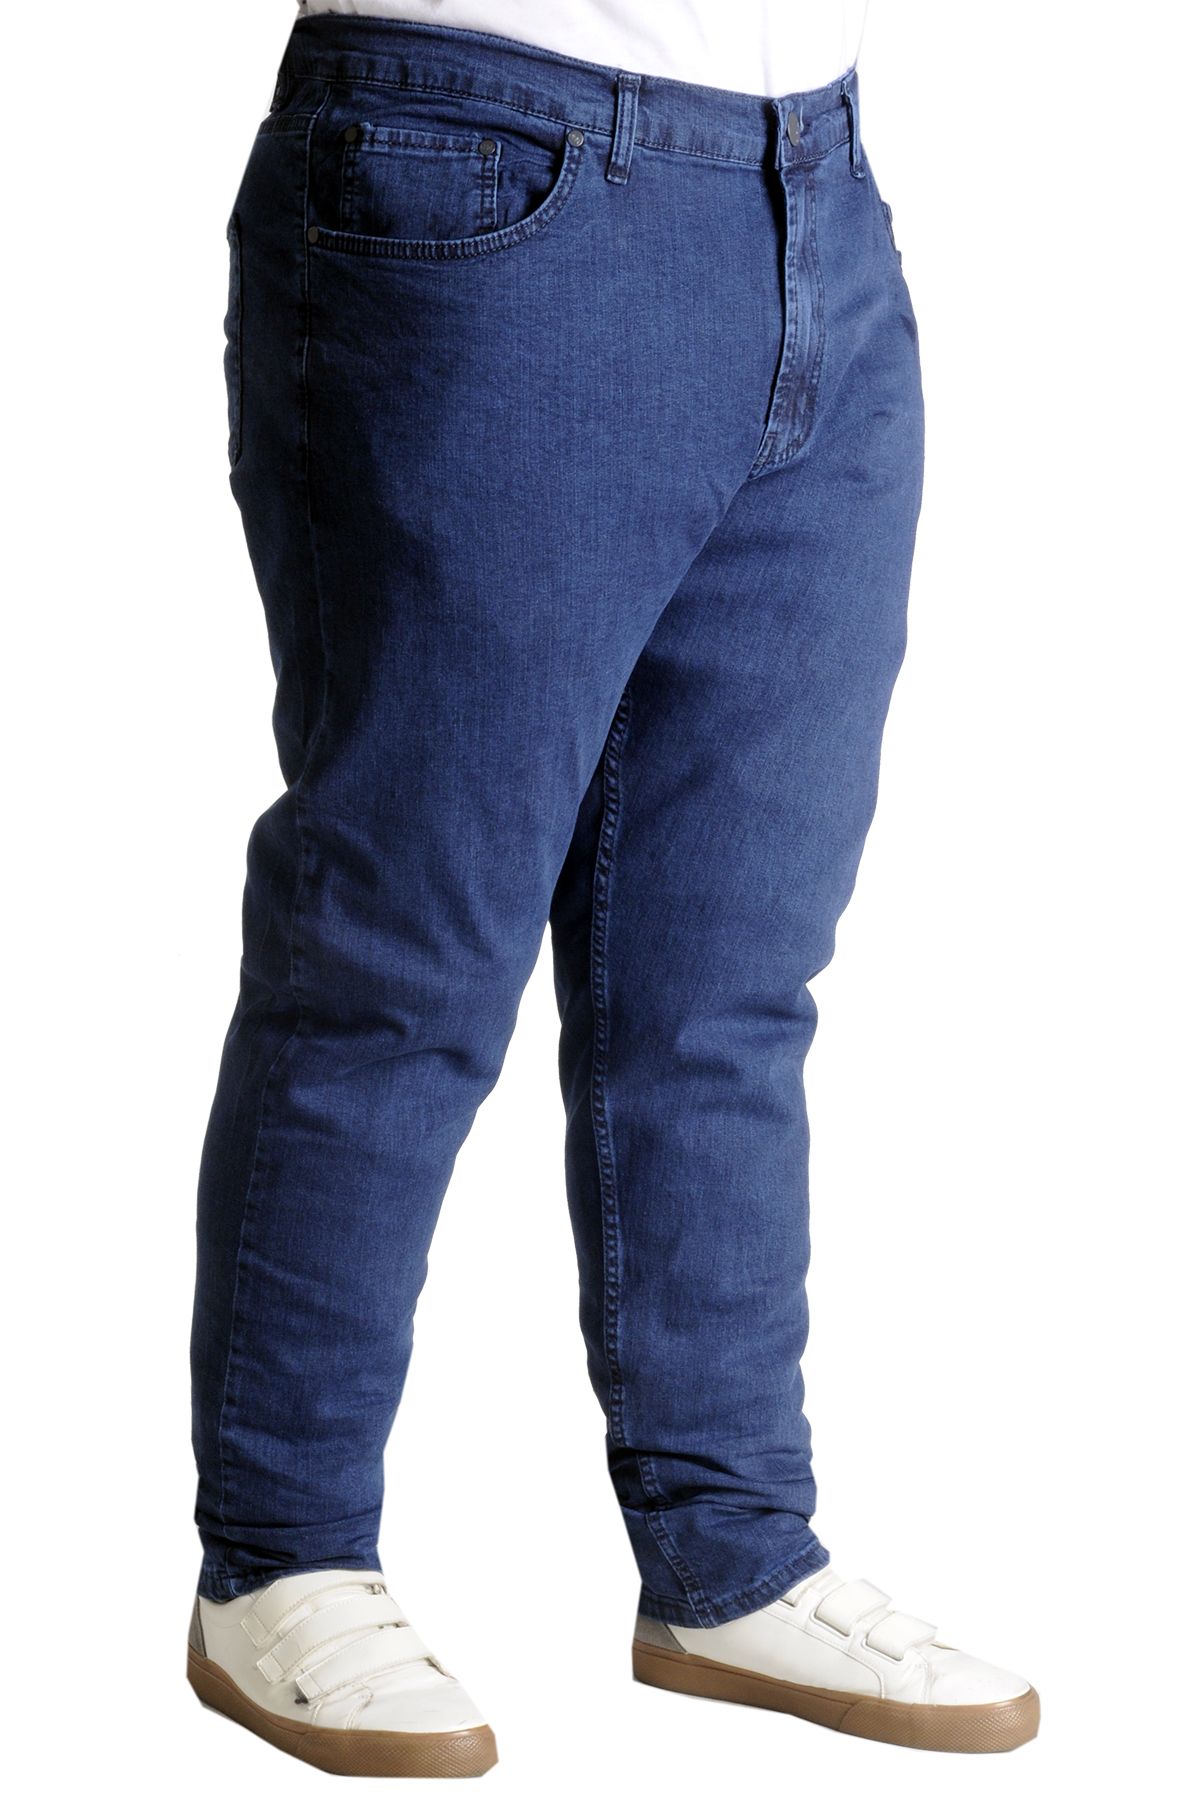 Modexl Mode Xl Büyük Beden Erkek Kot Pantolon Toronto Blue 22937 Koyu Mavi